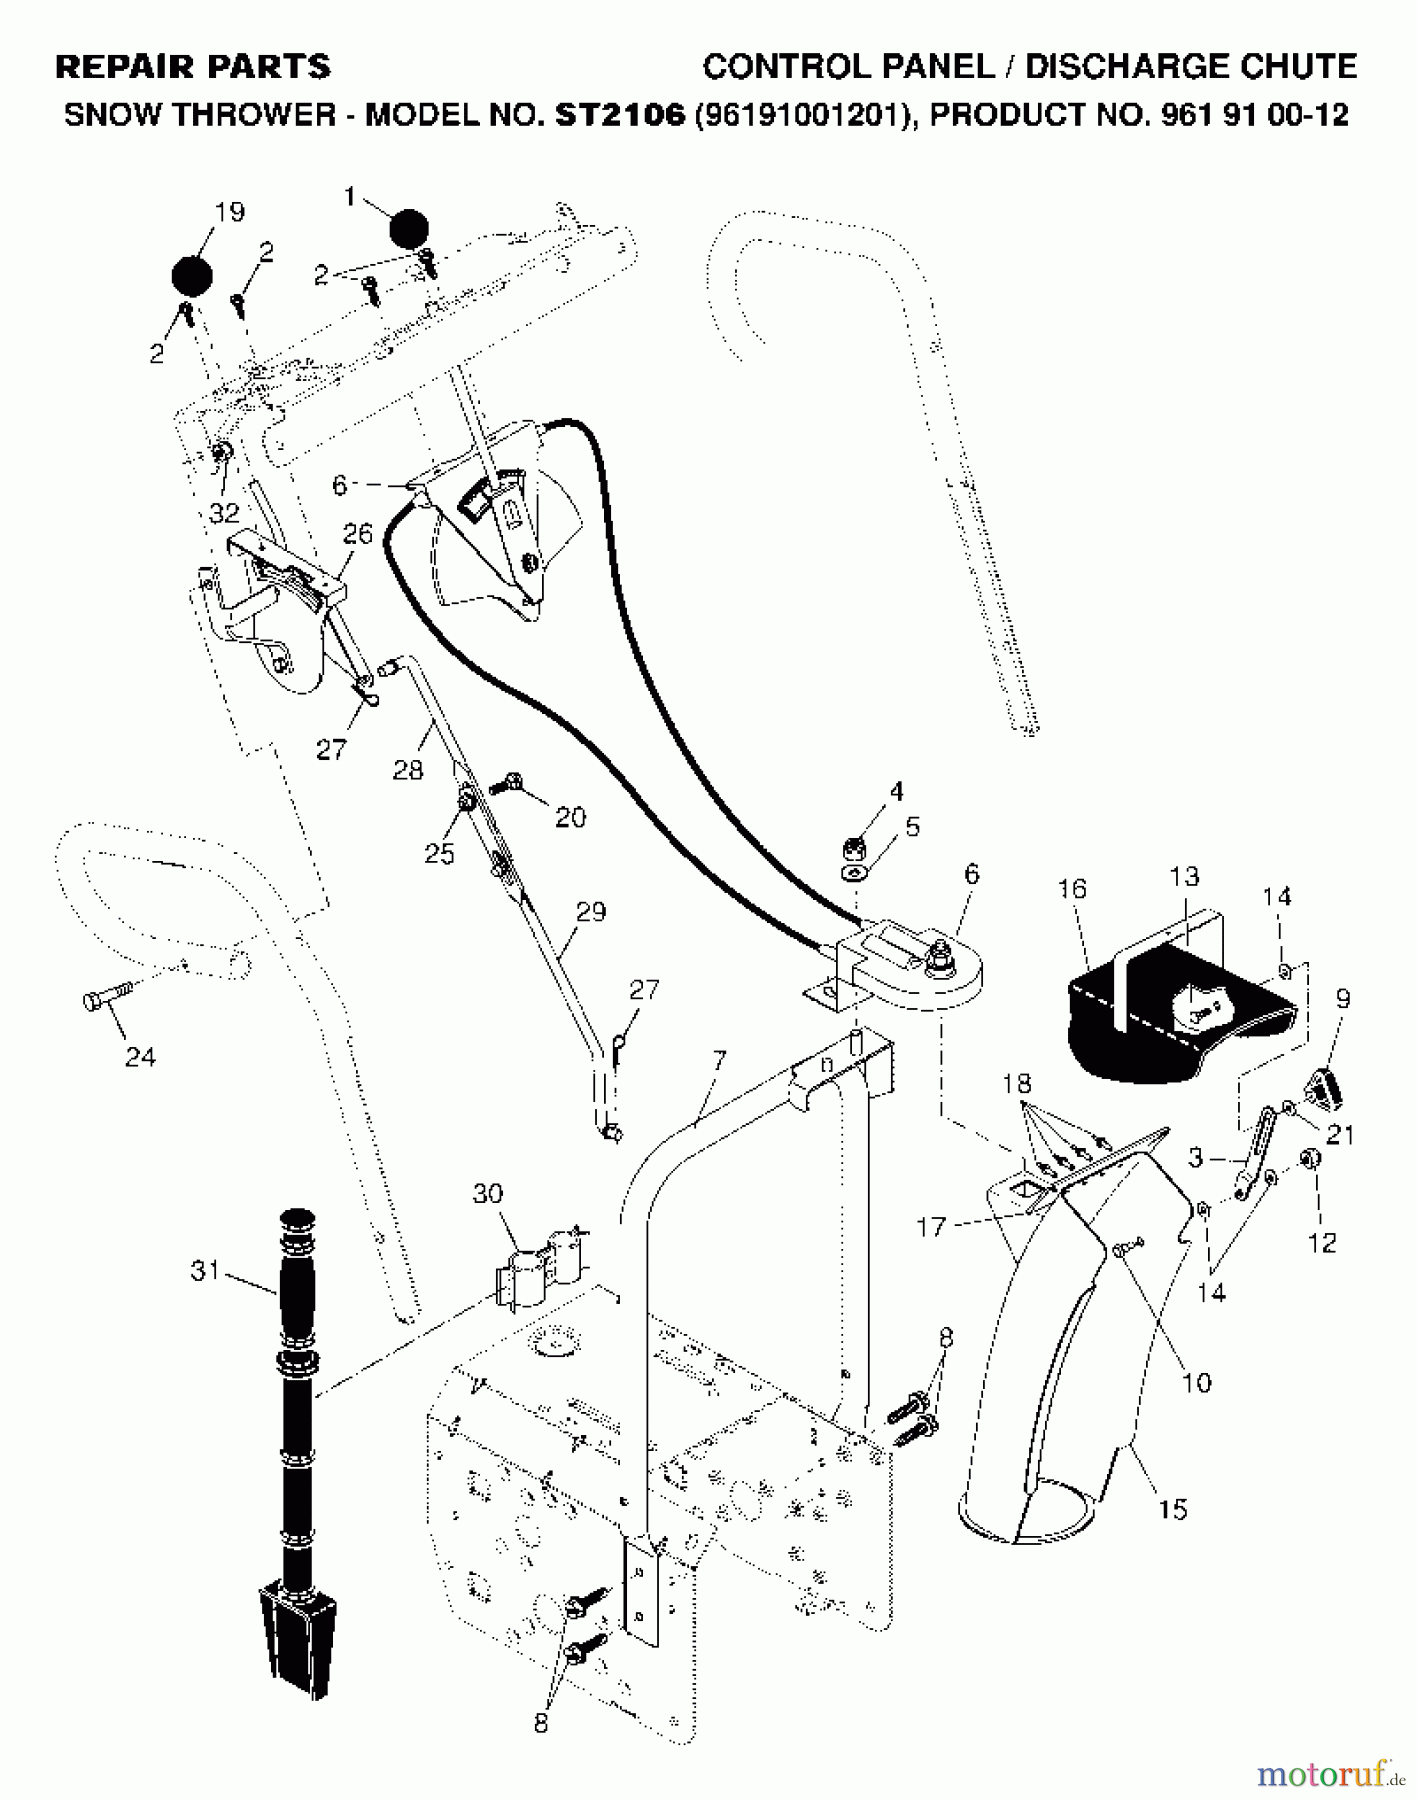  Jonsered Schneefräsen ST 2106 (961910012, 96191001201) - Jonsered Snow Thrower (2007-01) CONTROL PANEL DISCHARGE CHUTE